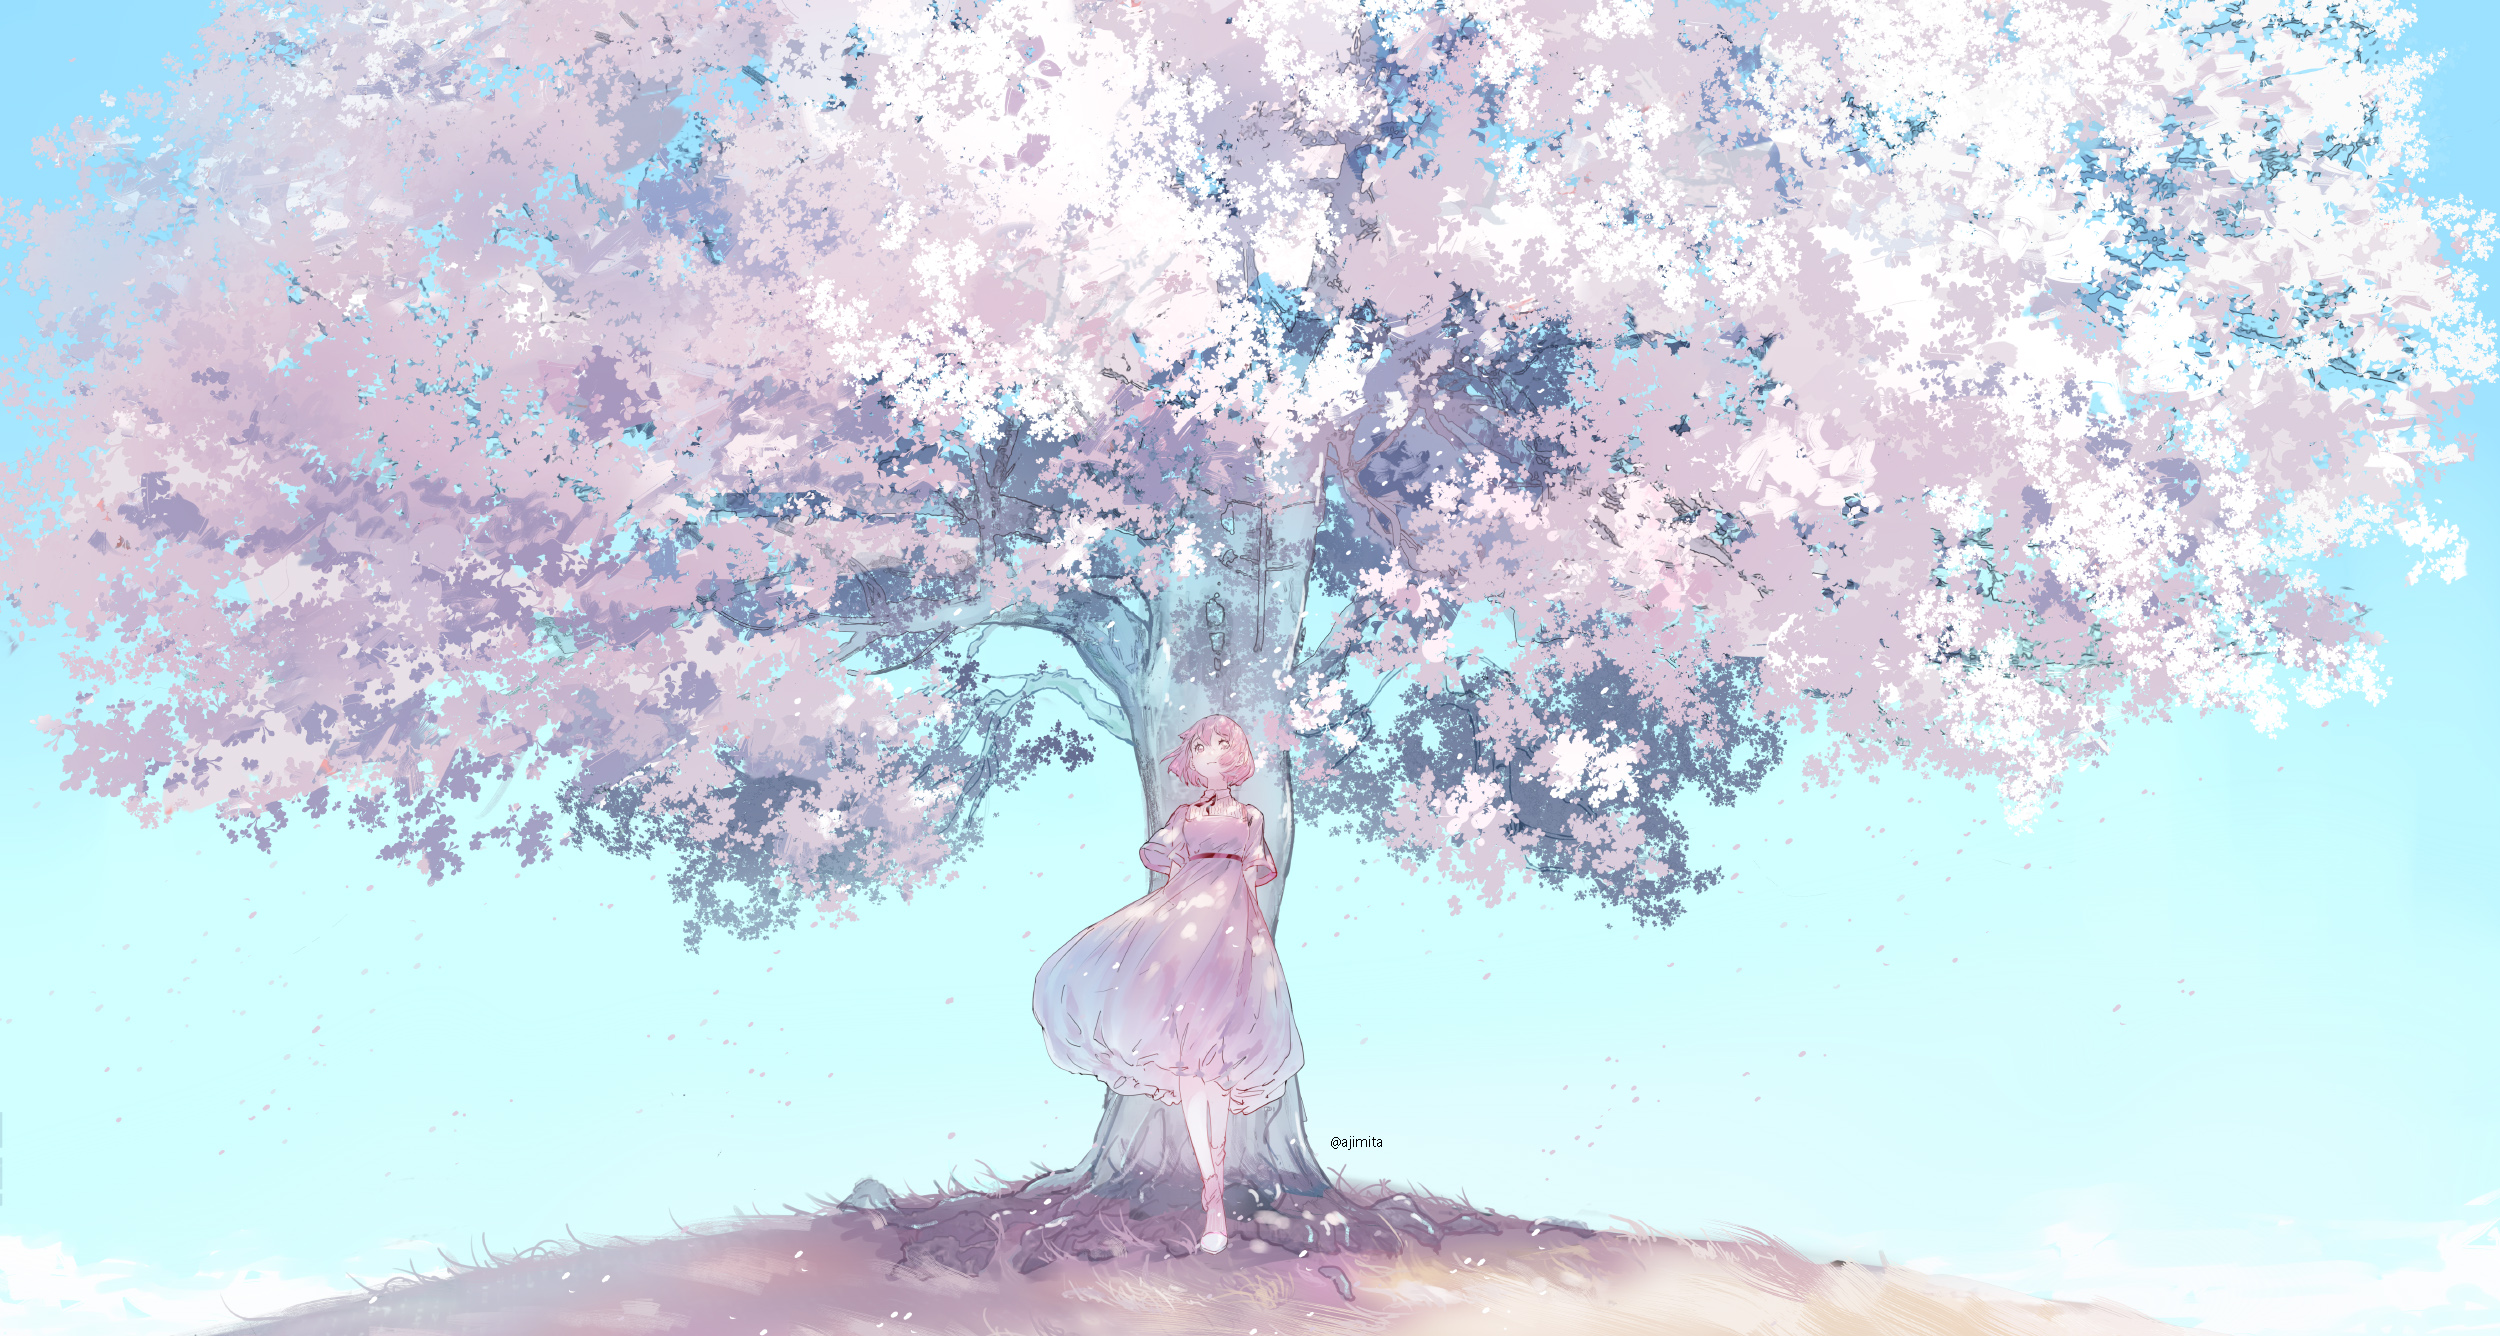 Anime 2500x1336 anime anime girls trees petals standing smiling dress looking up pink dress Ajimita